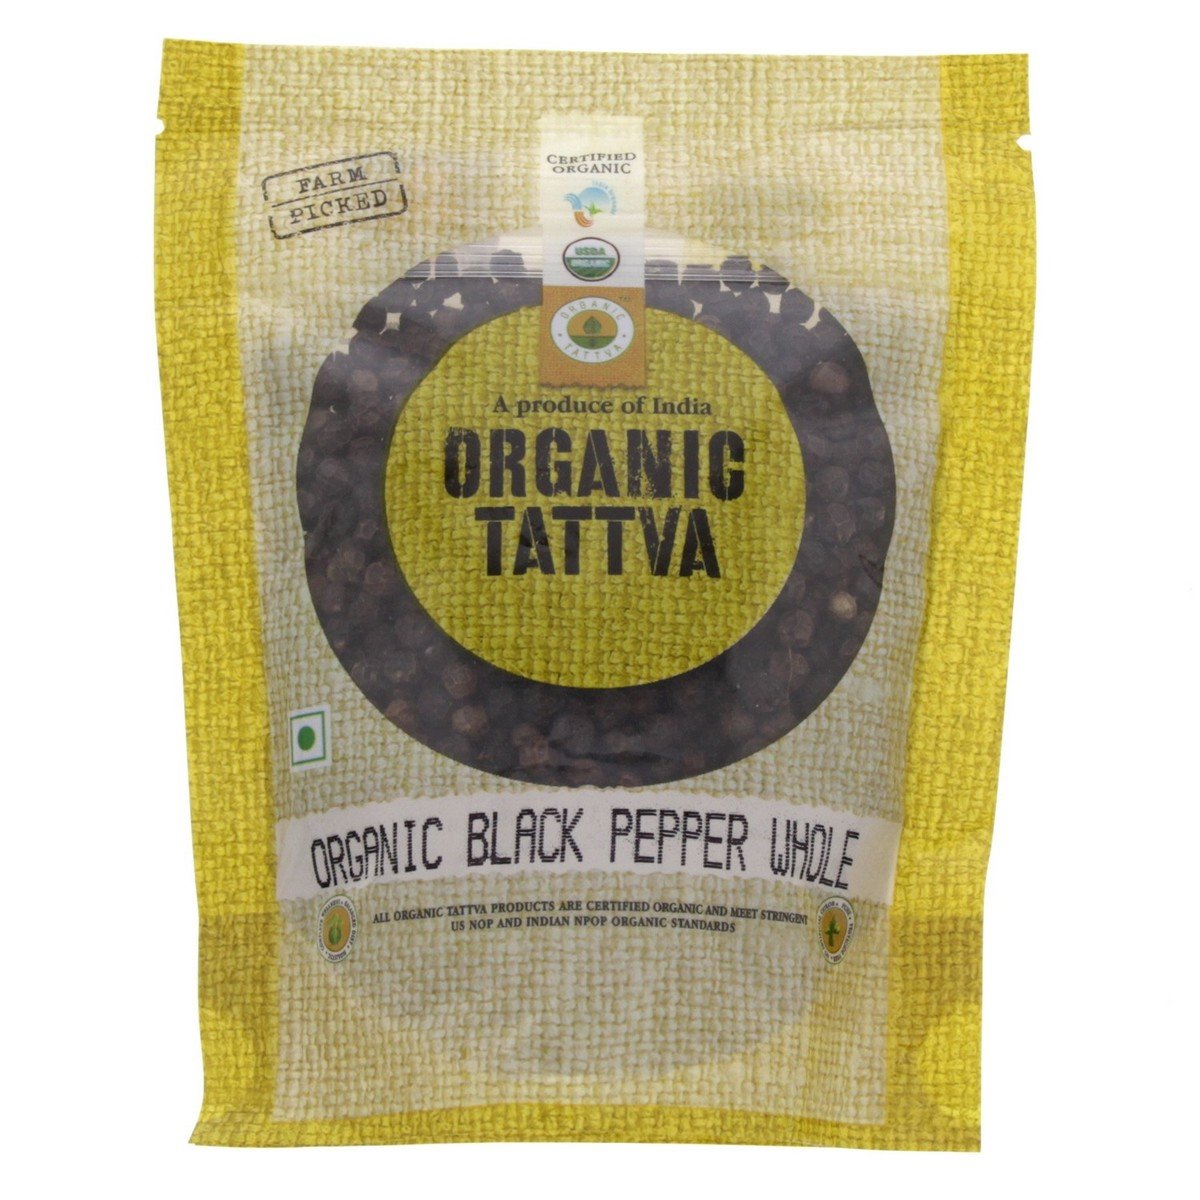 Organic Tattva Organic Black Pepper Whole 100 g